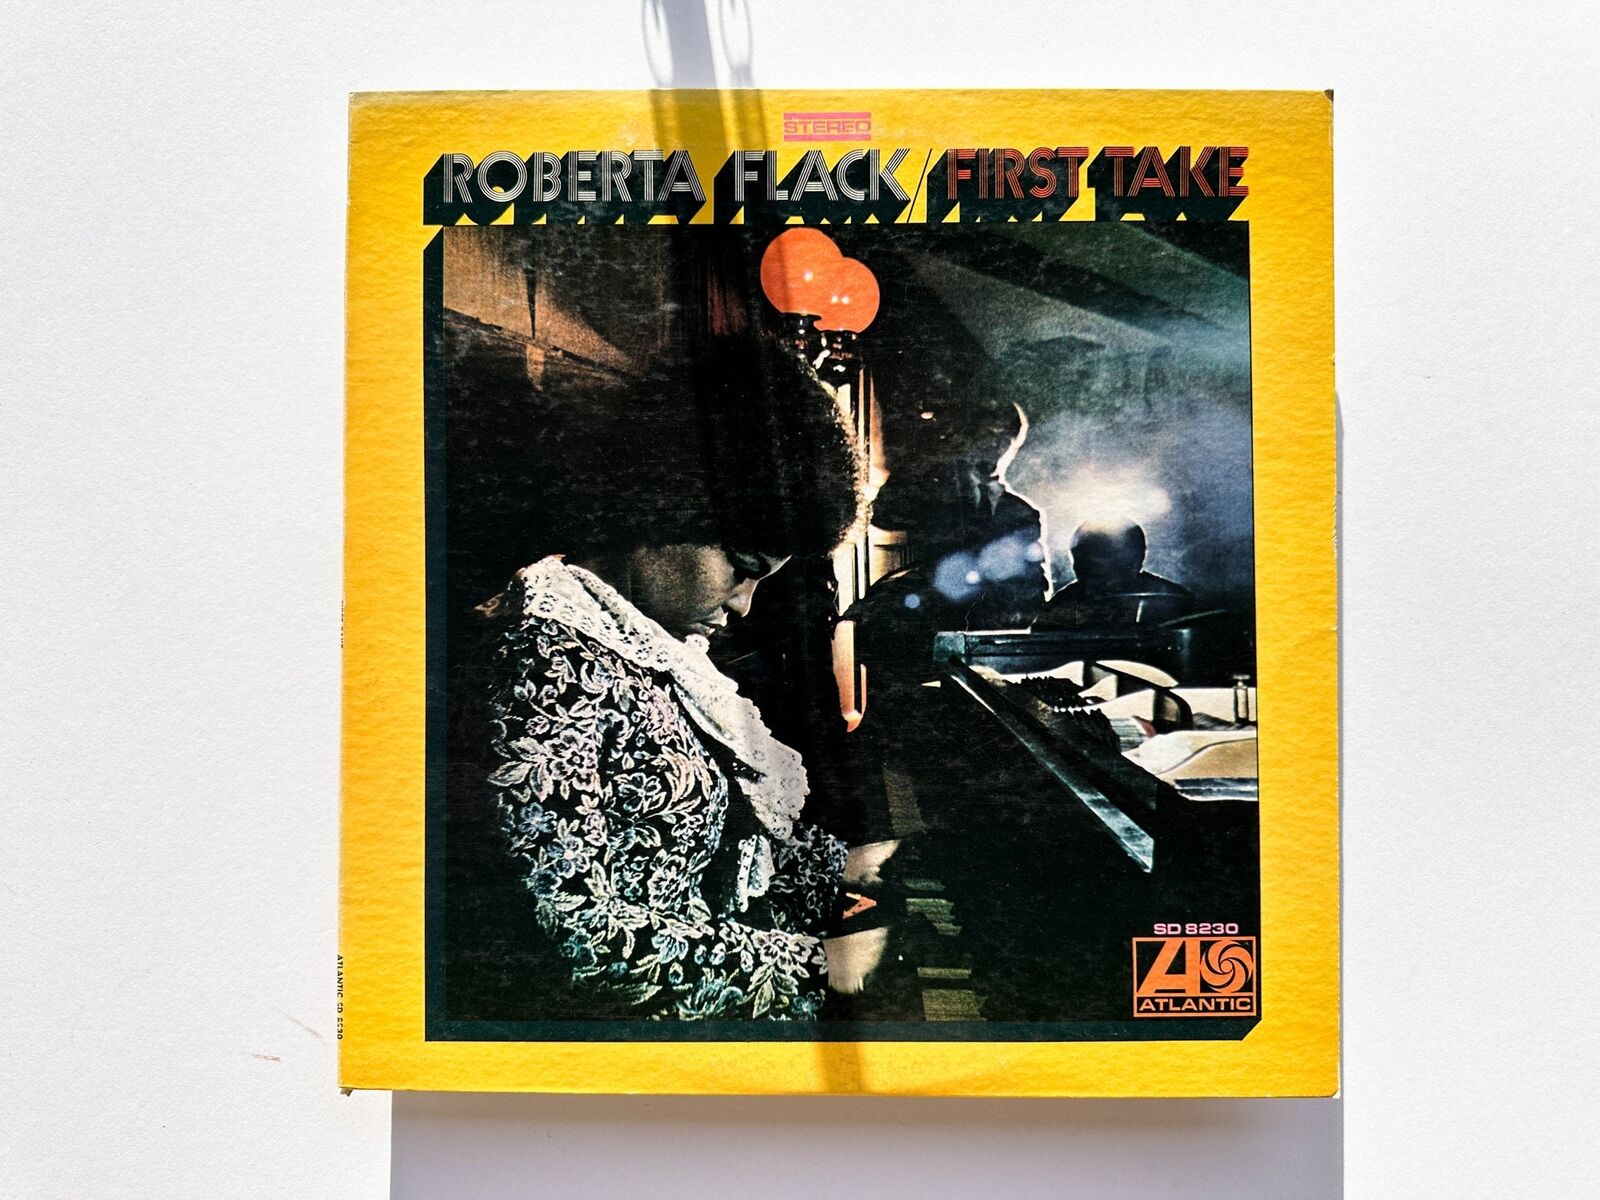 Roberta Flack - First Take - Vinyl LP Record - 1971